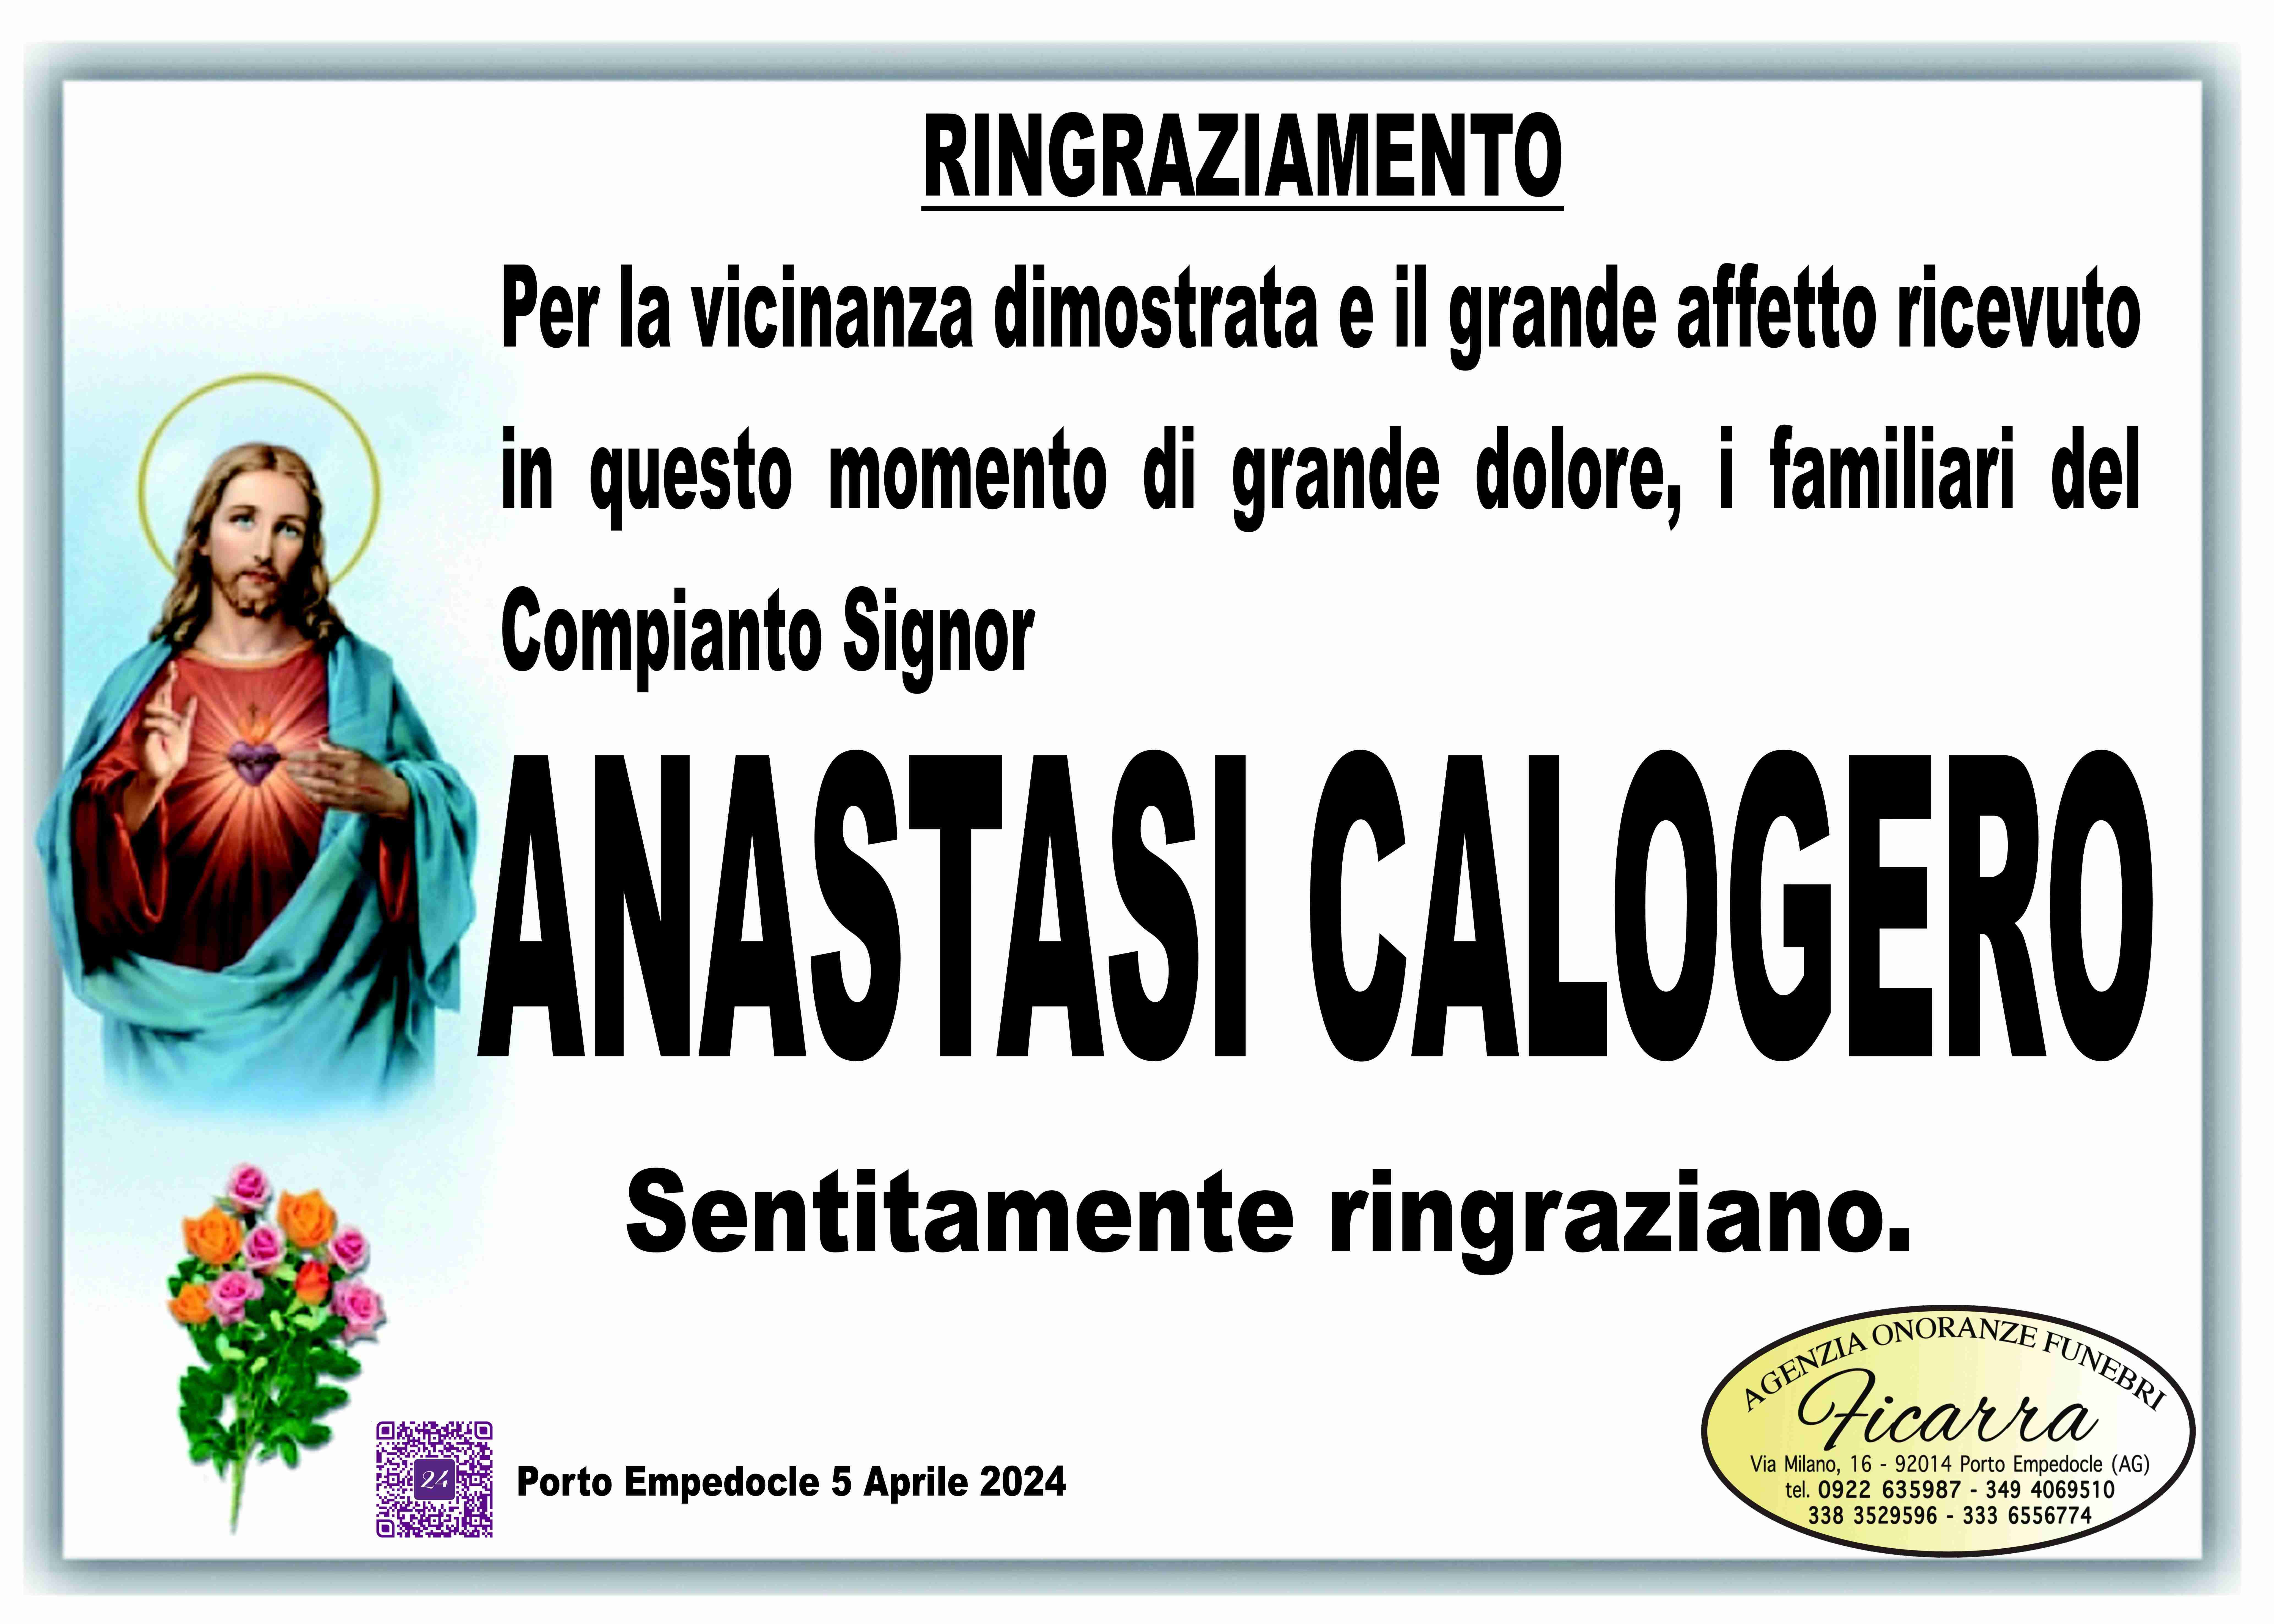 Calogero Anastasi